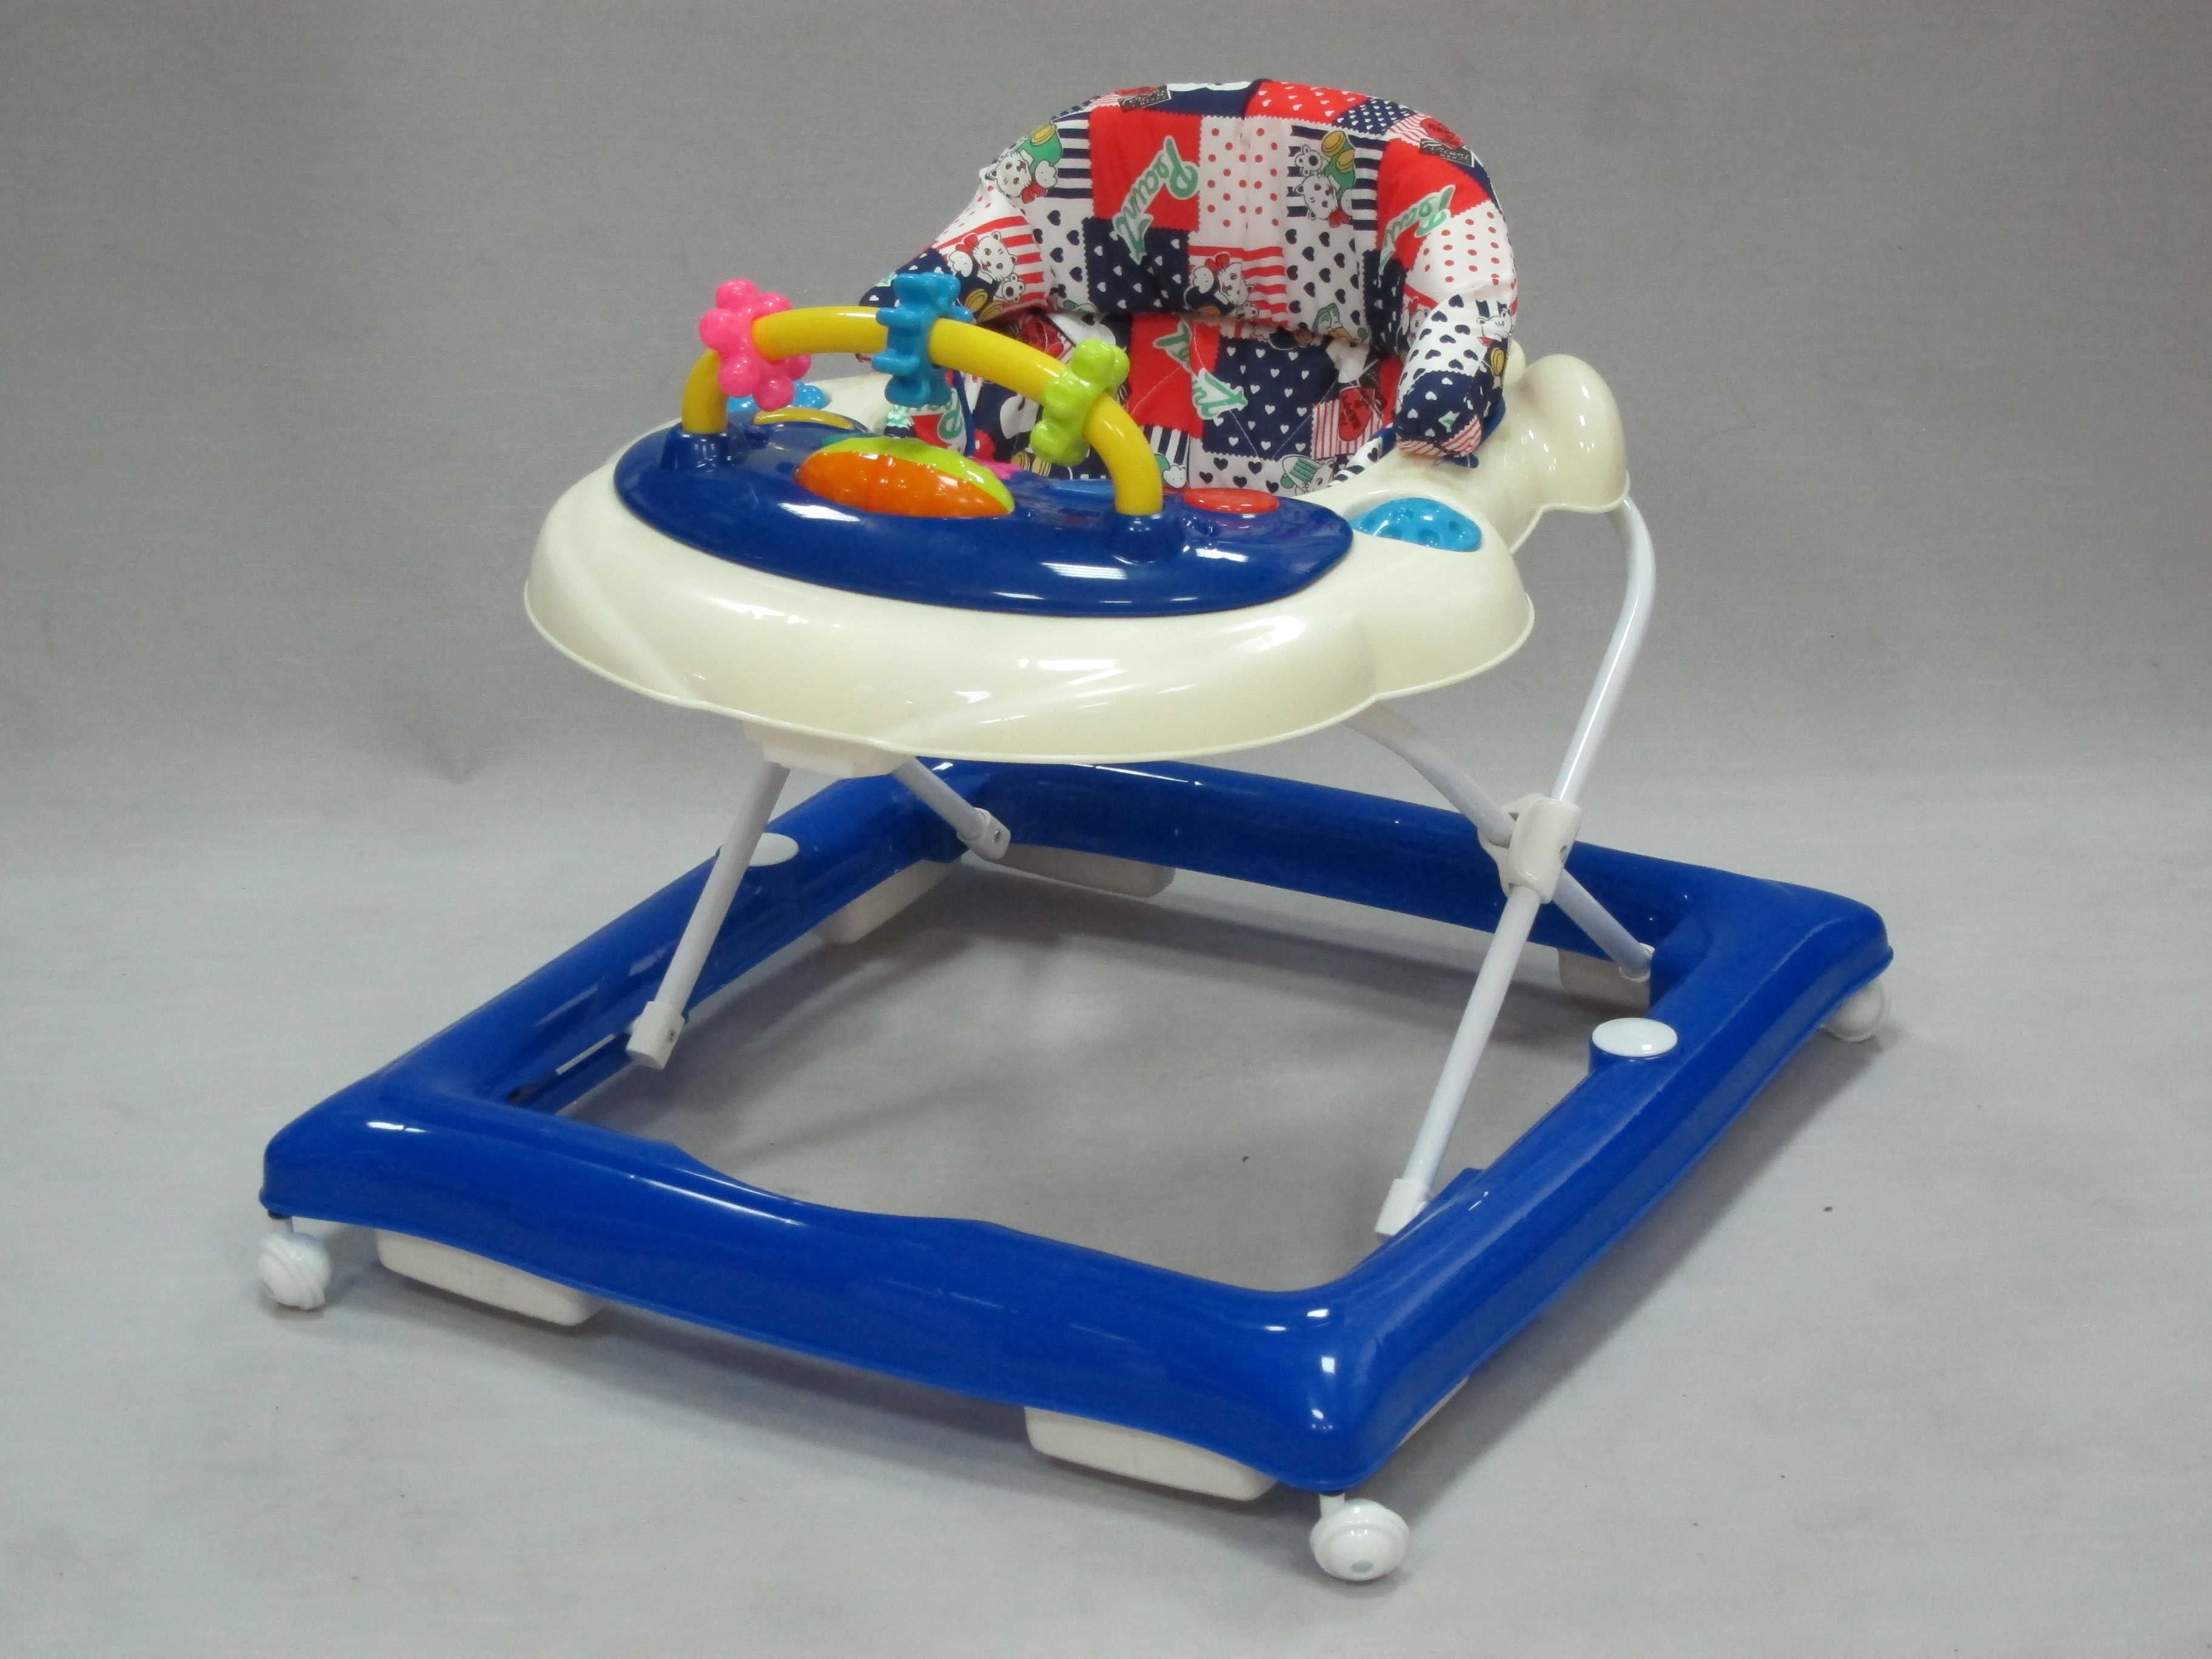 Foldable Baby Toddler Walker Learning-Seated Walk-Behind Adjustable Speed Wheels 